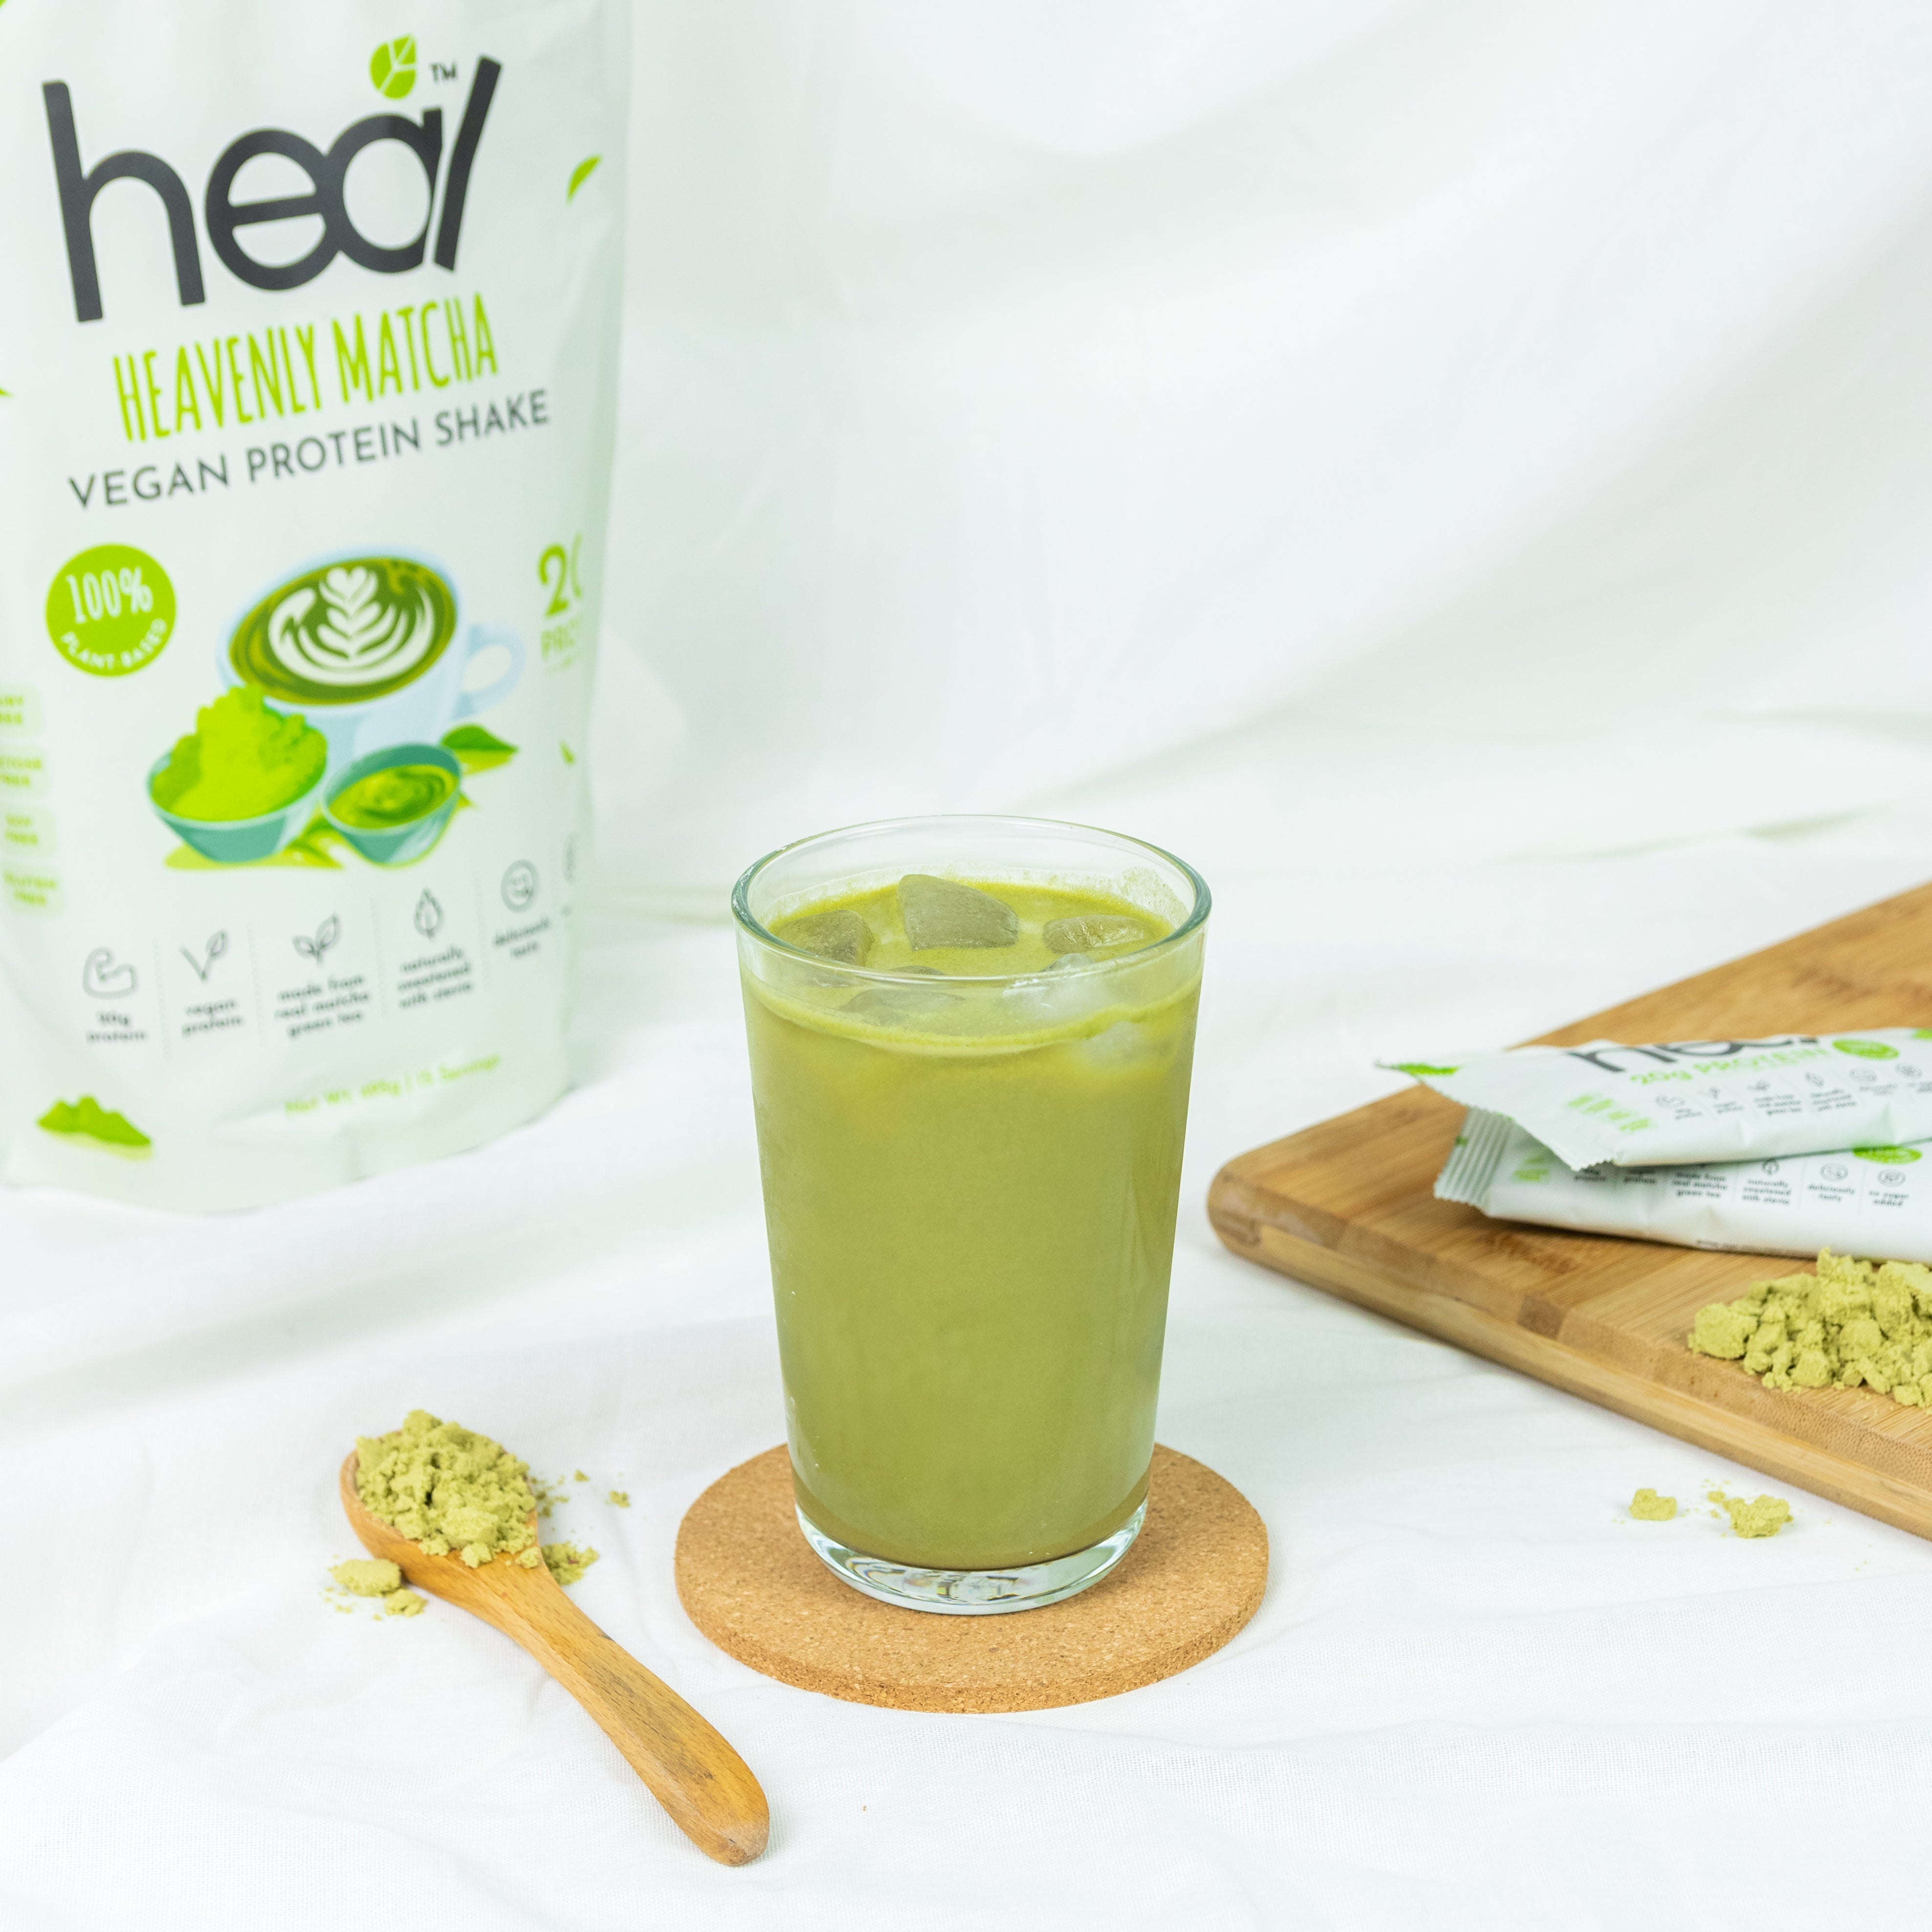 Heal Heavenly Matcha Vegan Protein Shake 3x Sachets Bundle (33g)